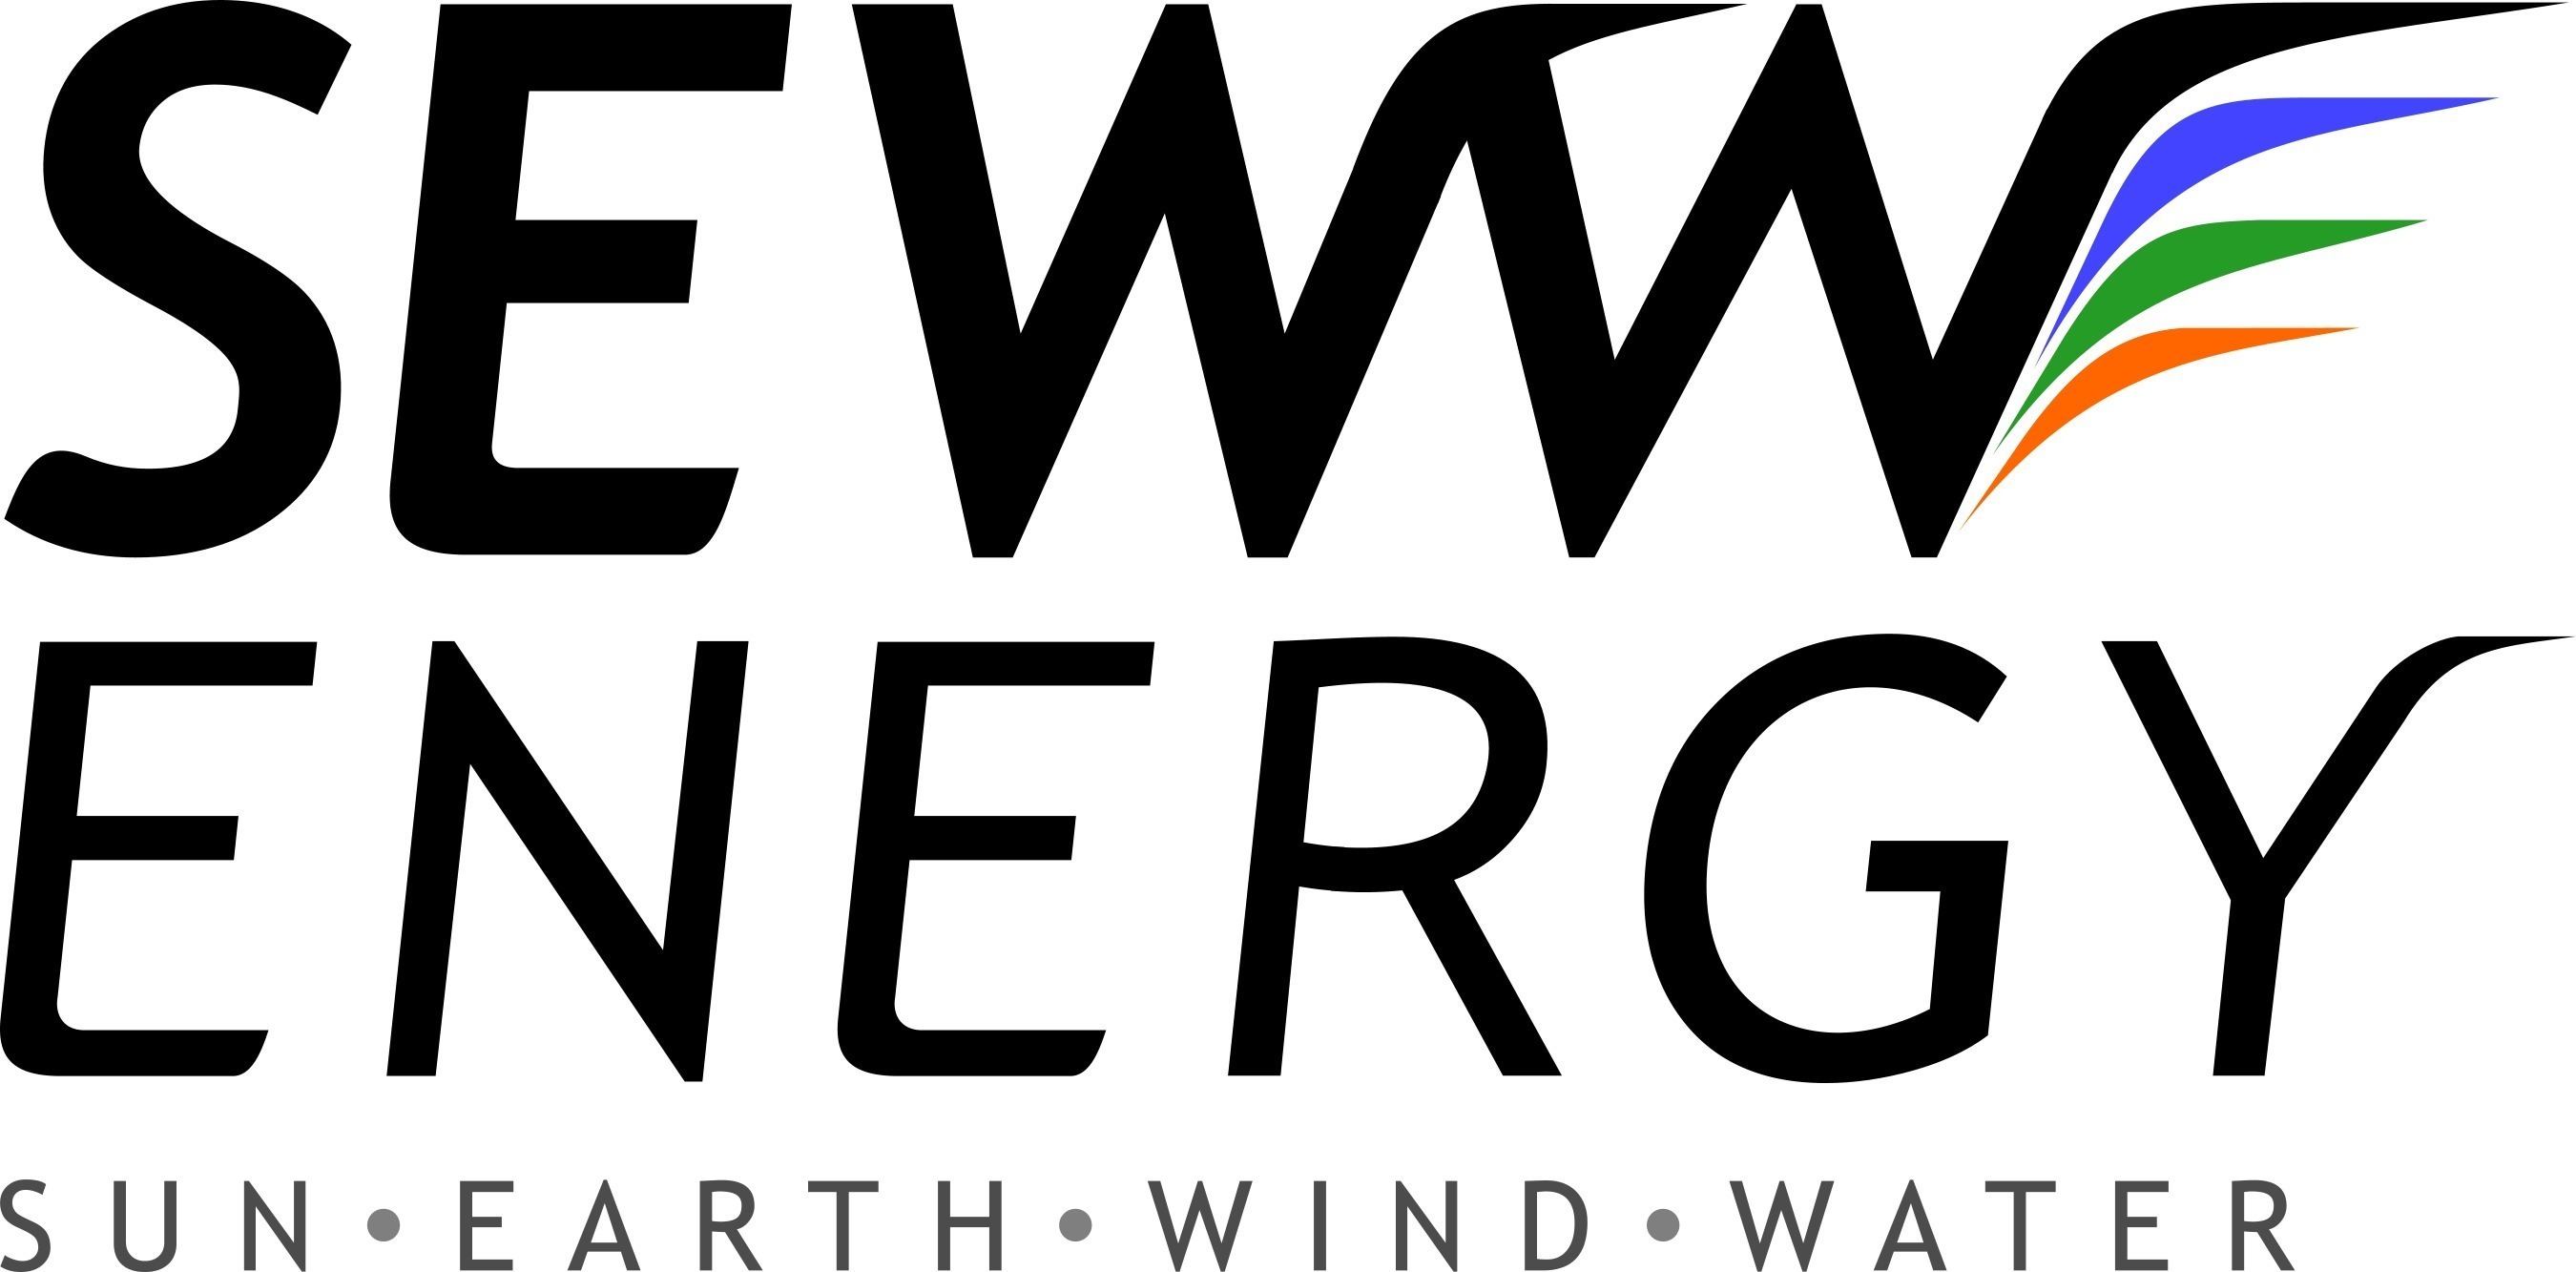 SEWW Energy Logo (PRNewsFoto/SEWW Energy Inc.) (PRNewsFoto/SEWW Energy Inc.)